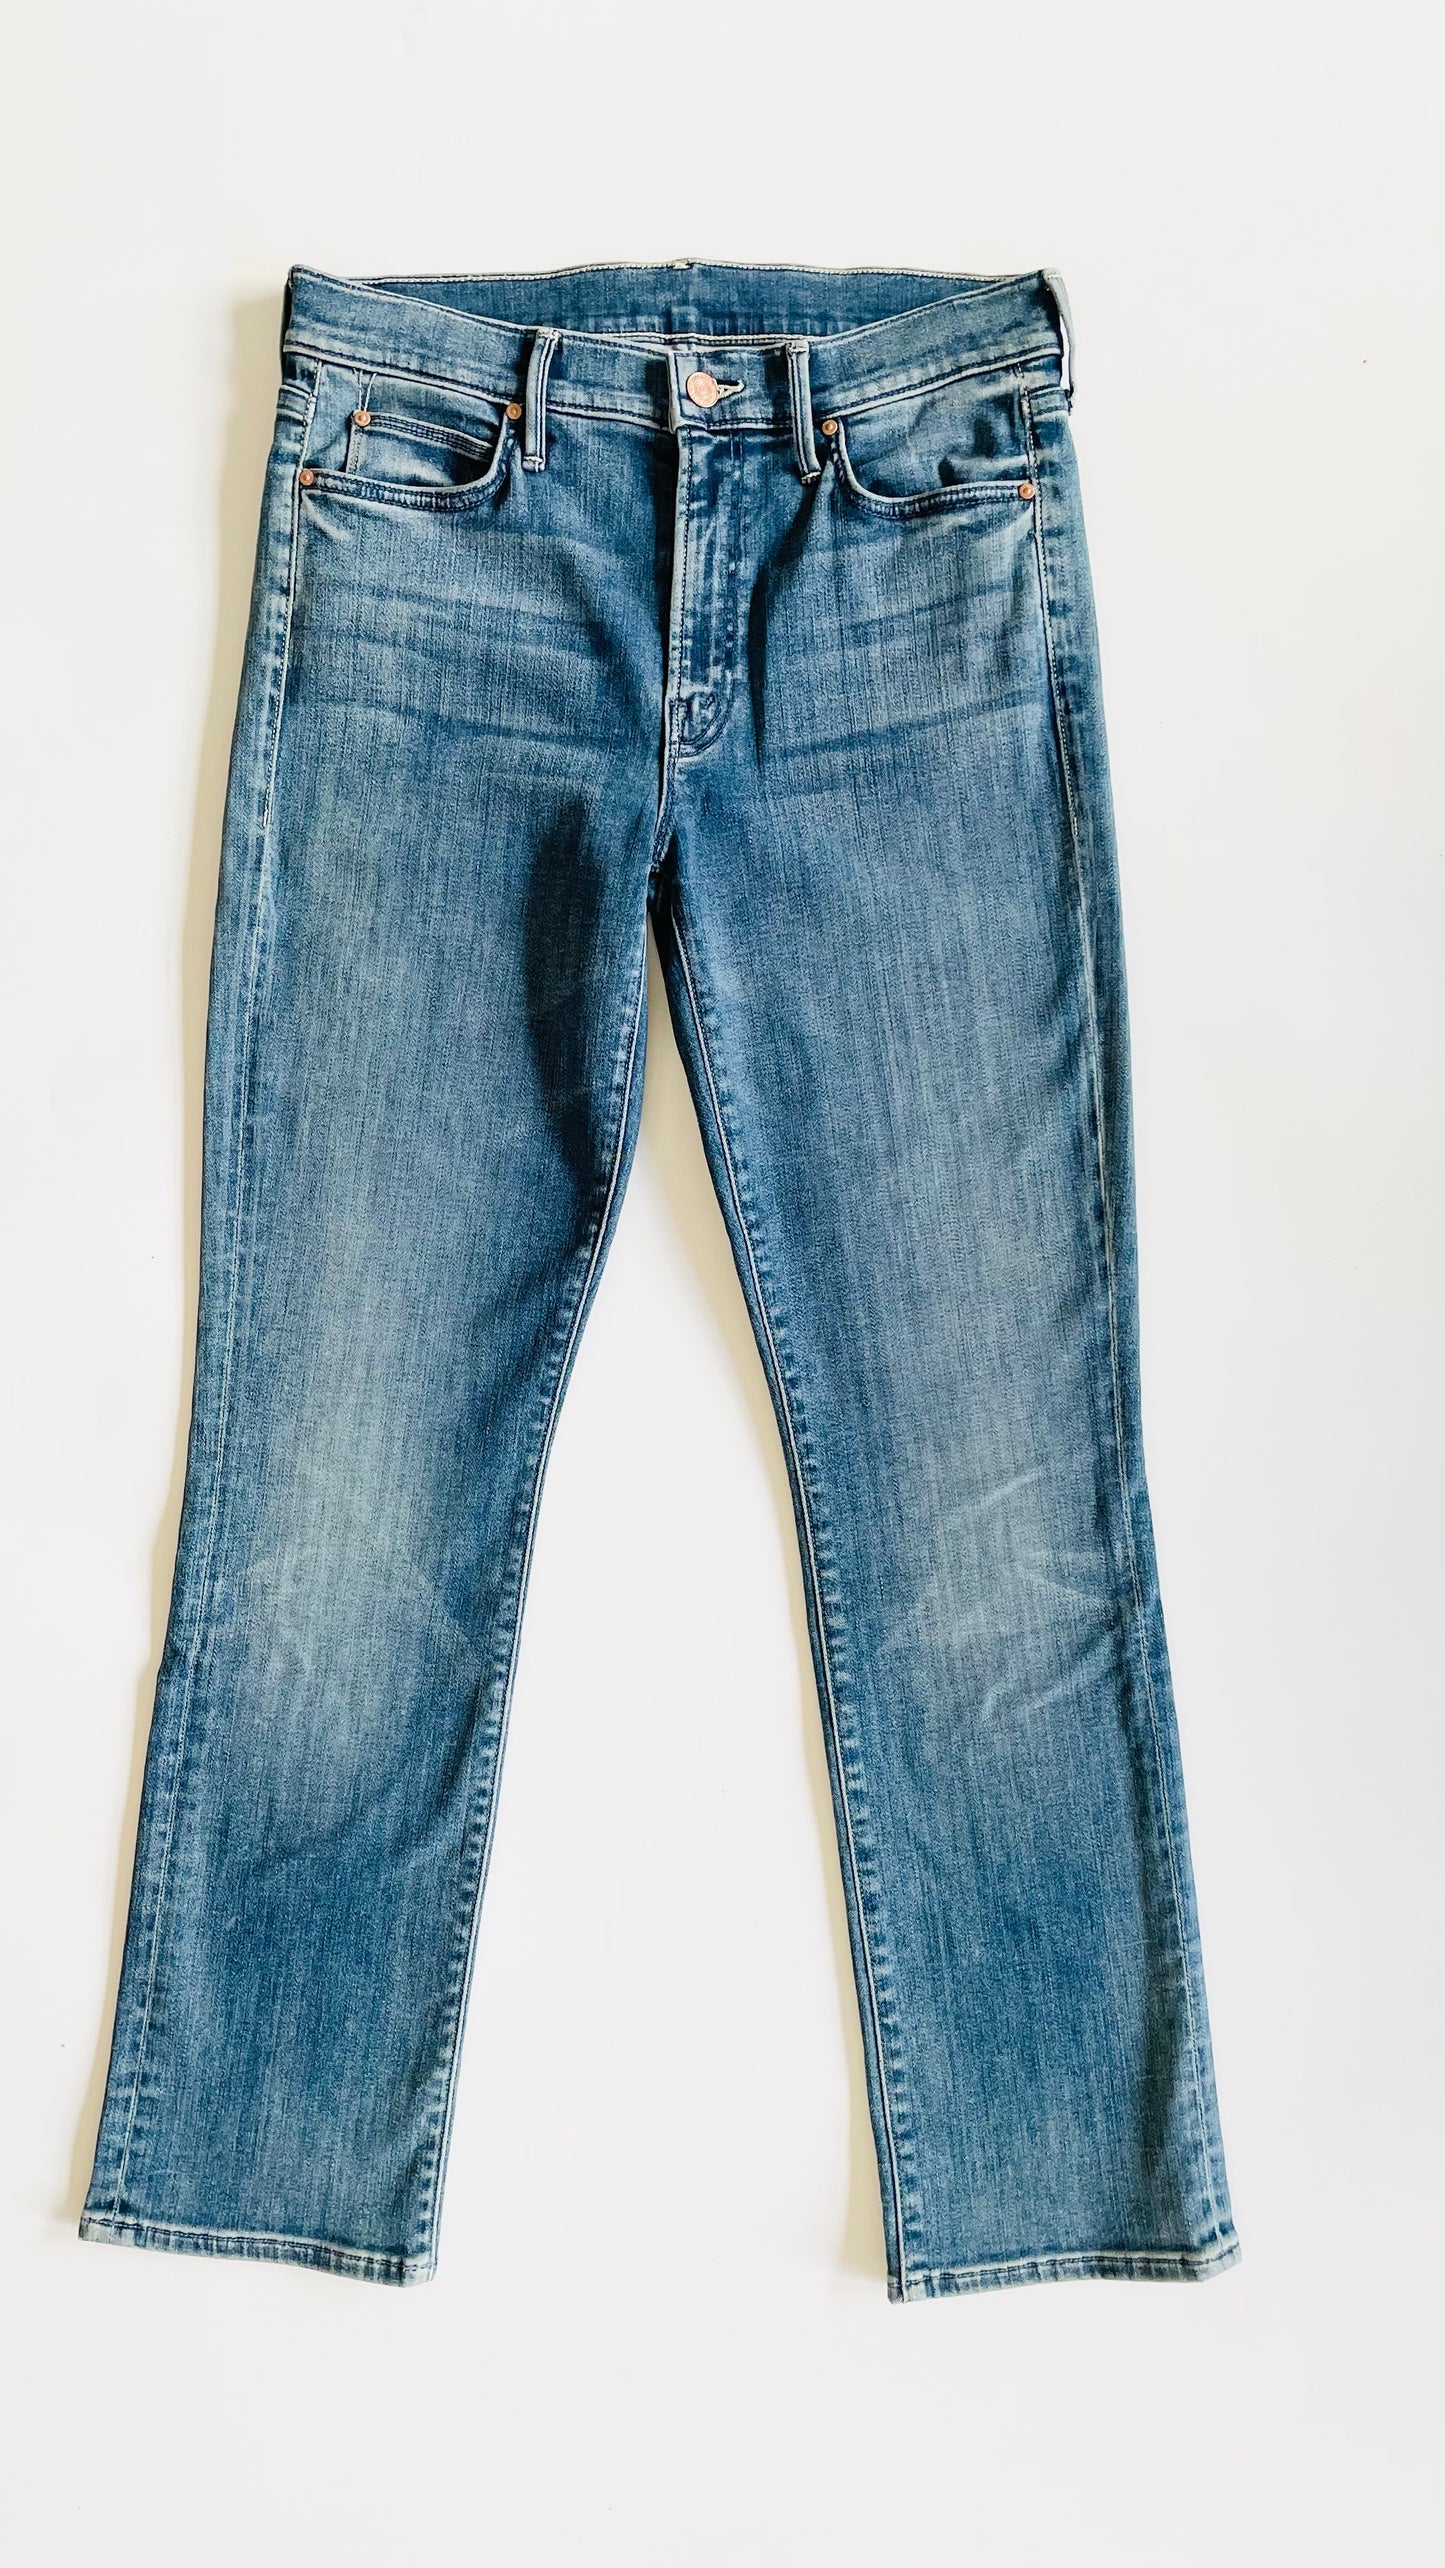 Pre-Loved MOTHER denim jeans NWOT - Size 30 x 28